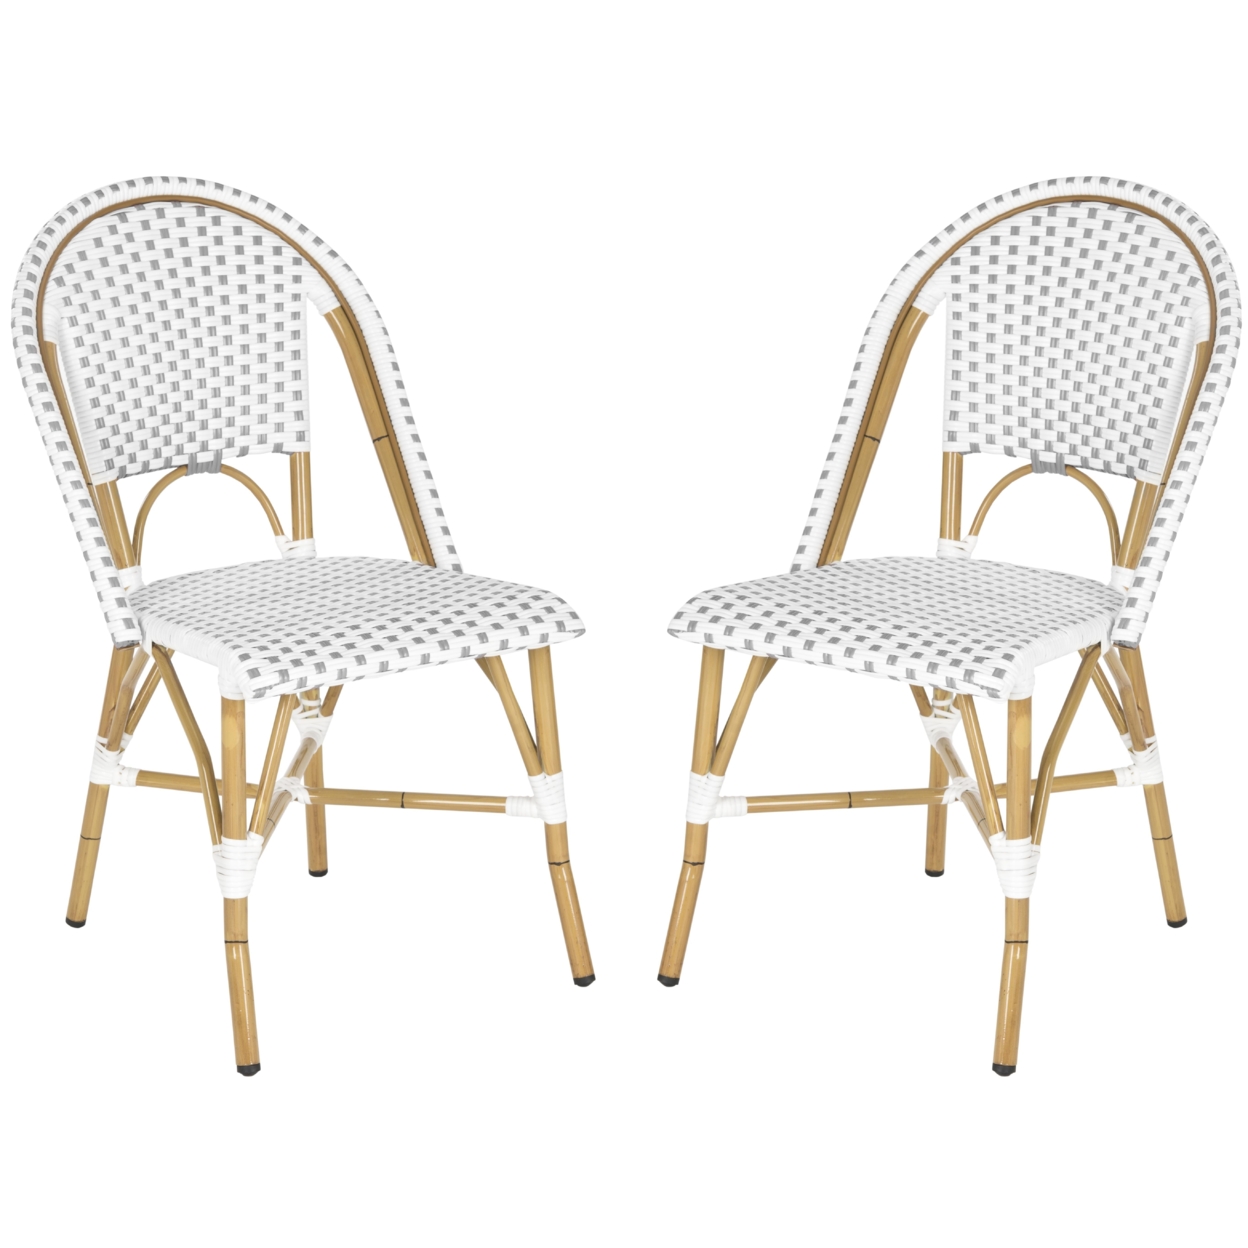 SAFAVIEH Outdoor Collection Salcha Bistro Side Chair Grey/White/Light Brown